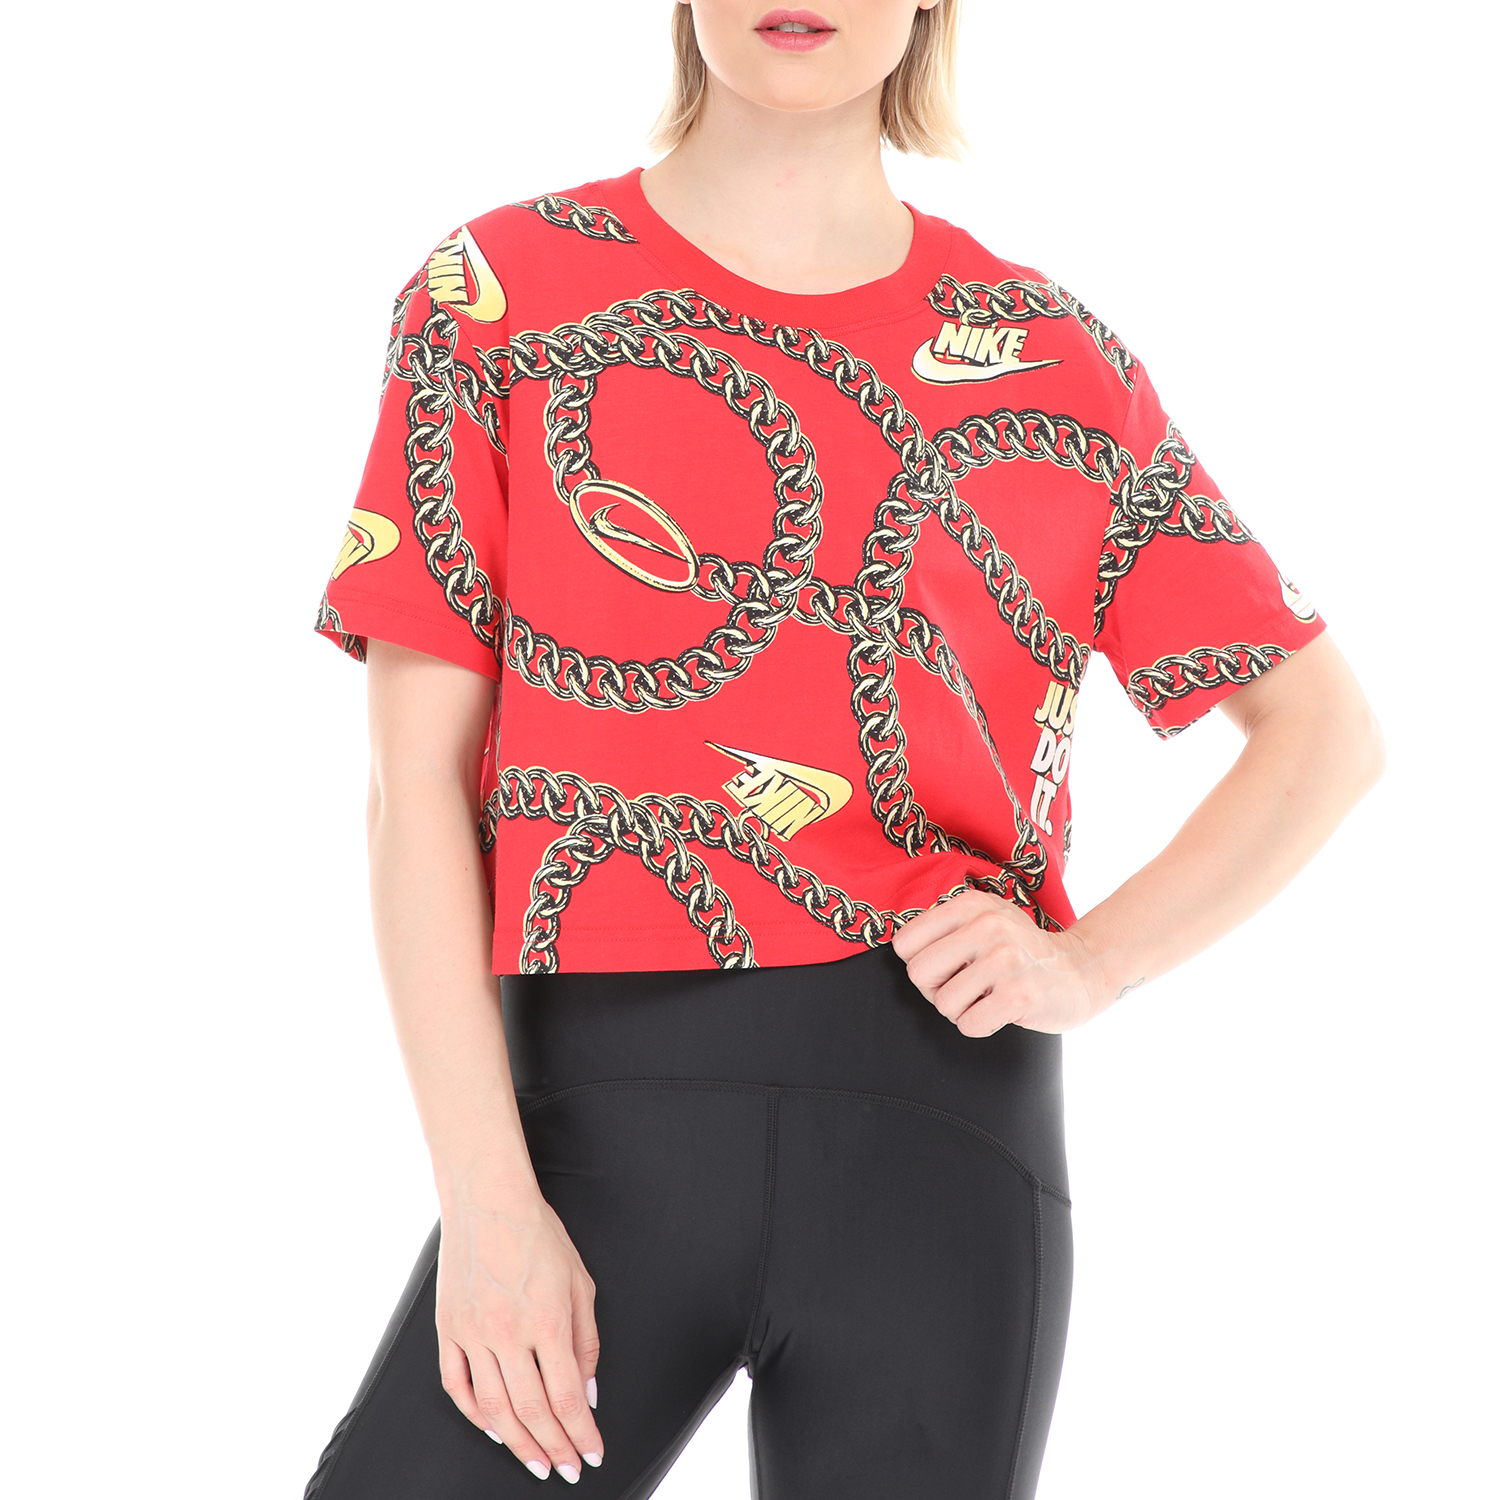 NIKE - Γυναικείο t-shirt NSW TEE GLAM DUNK CROP κόκκινο χρυσό Γυναικεία/Ρούχα/Αθλητικά/T-shirt-Τοπ